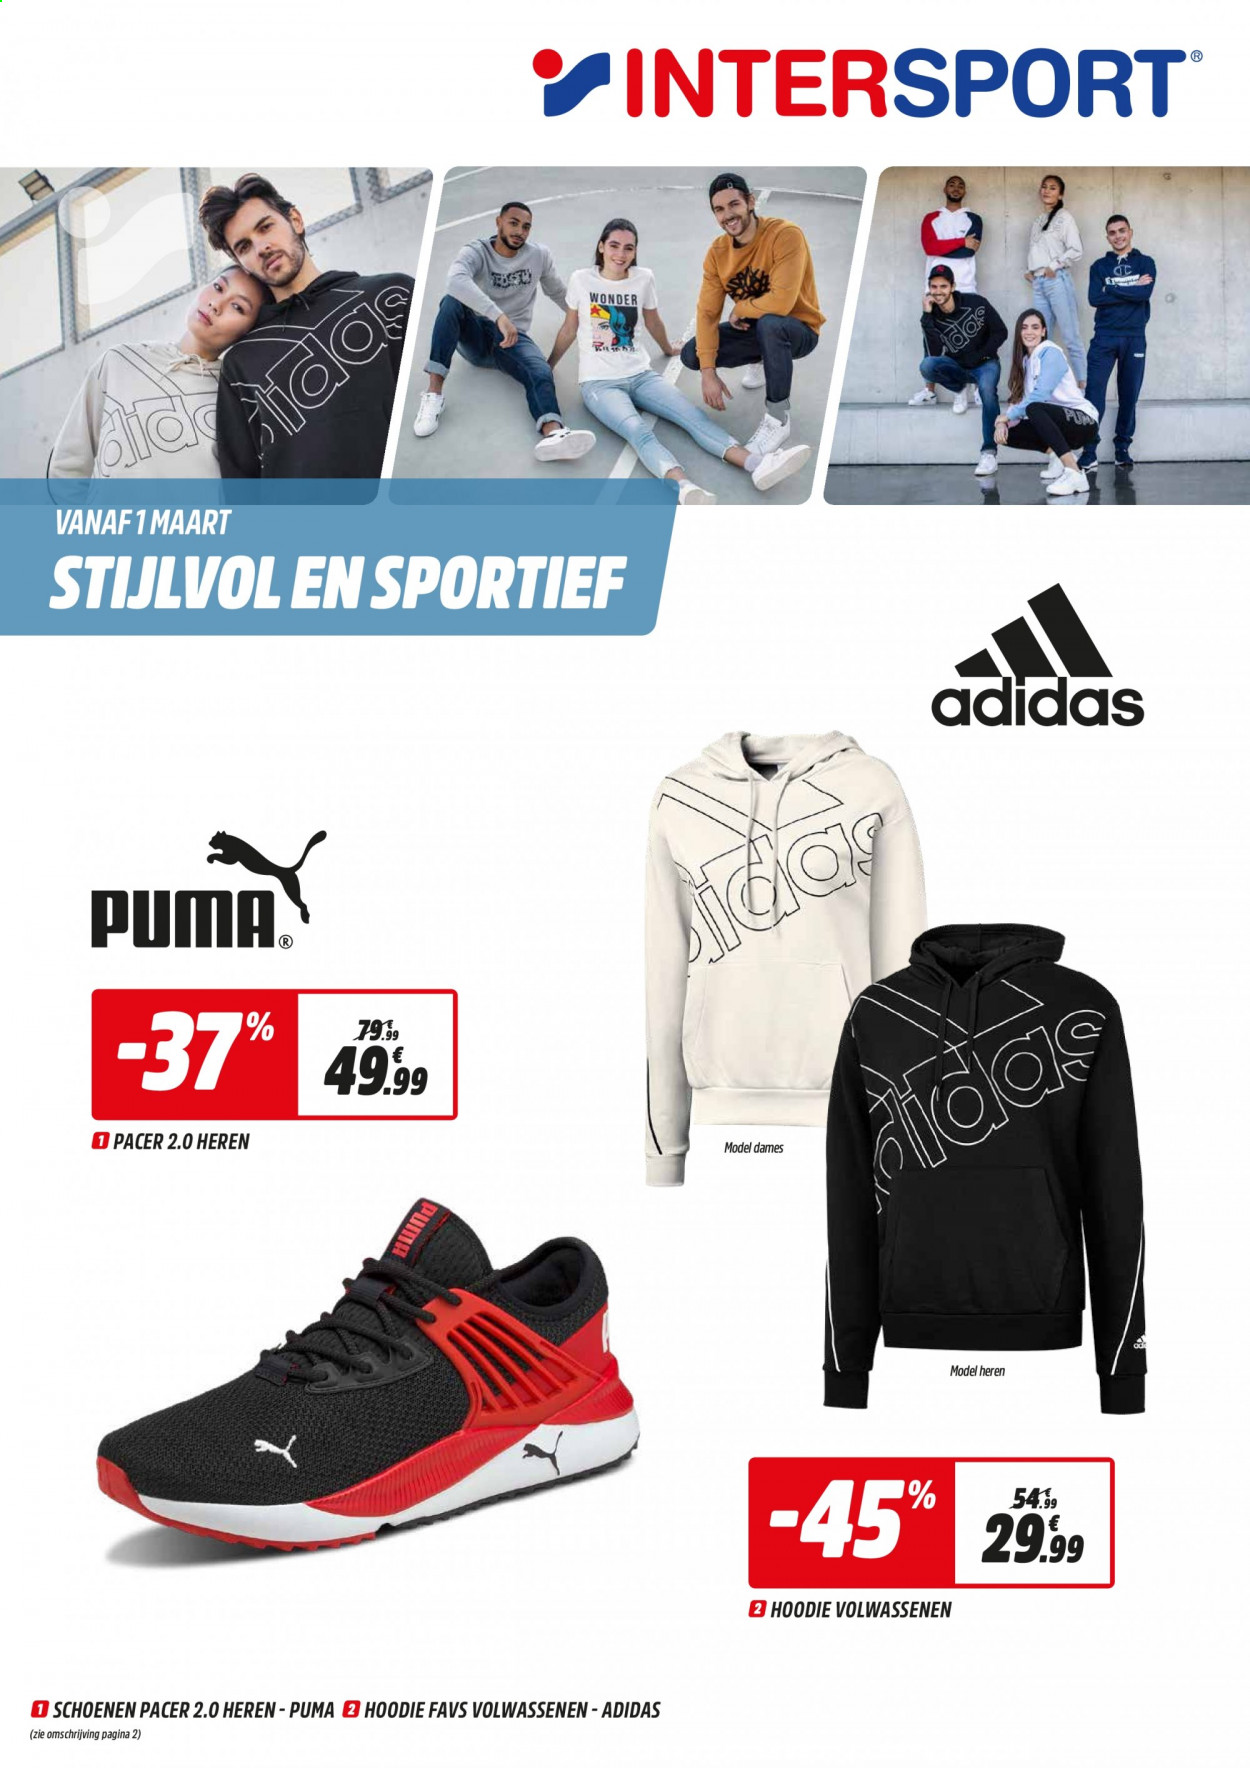 thumbnail - Intersport-aanbieding - 01/03/2021 - 13/03/2021 -  producten in de aanbieding - Adidas, Puma. Pagina 1.